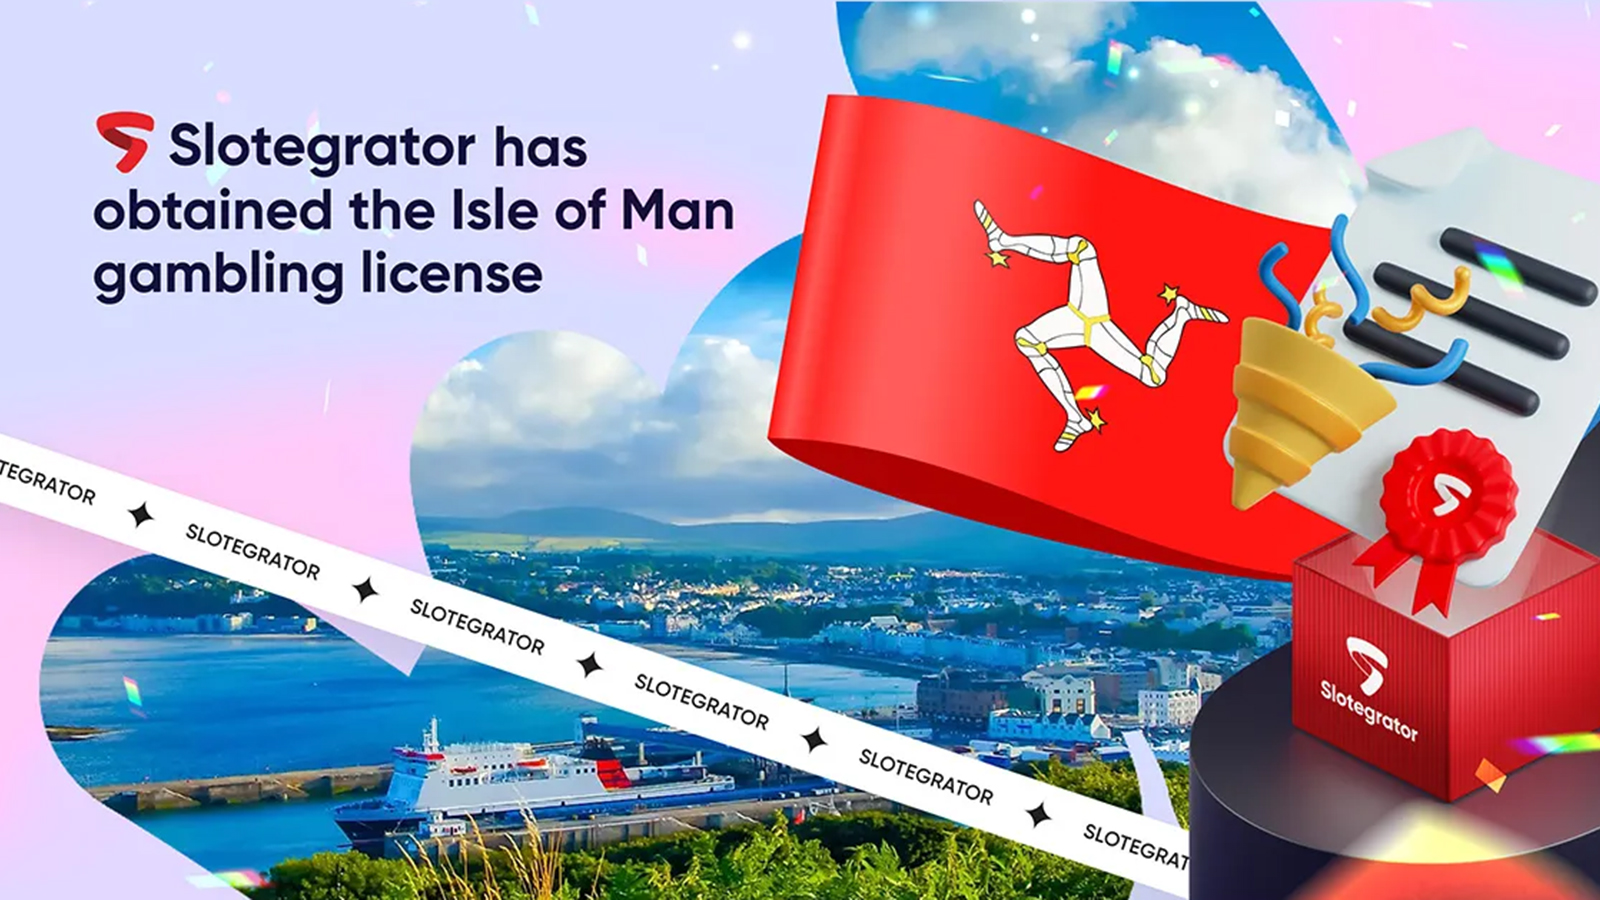 Slotegrator Obtains Isle of Man License